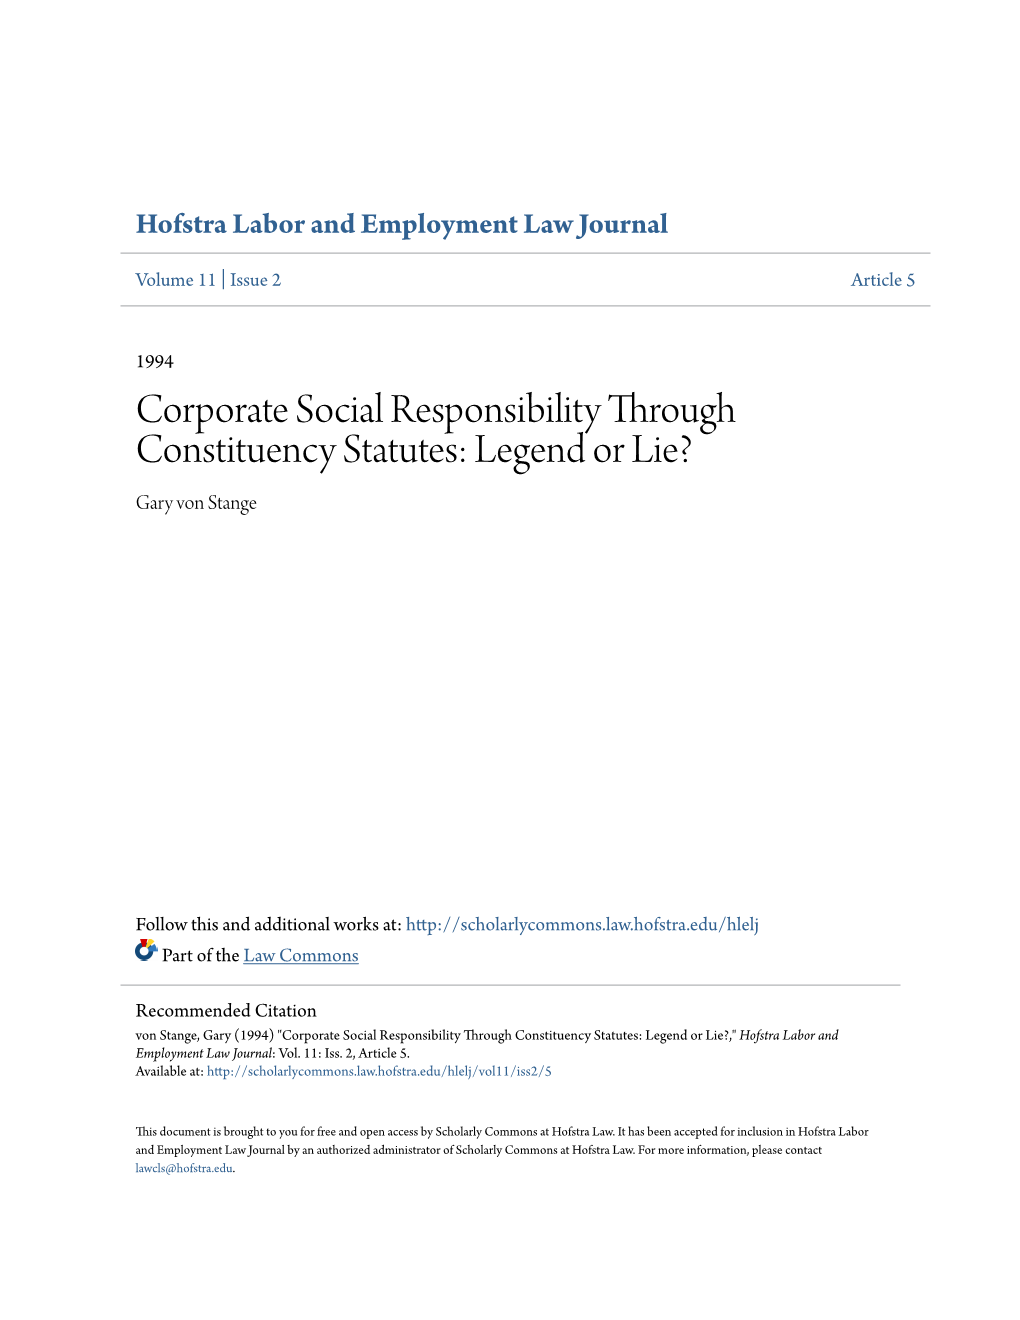 Corporate Social Responsibility Through Constituency Statutes: Legend Or Lie? Gary Von Stange